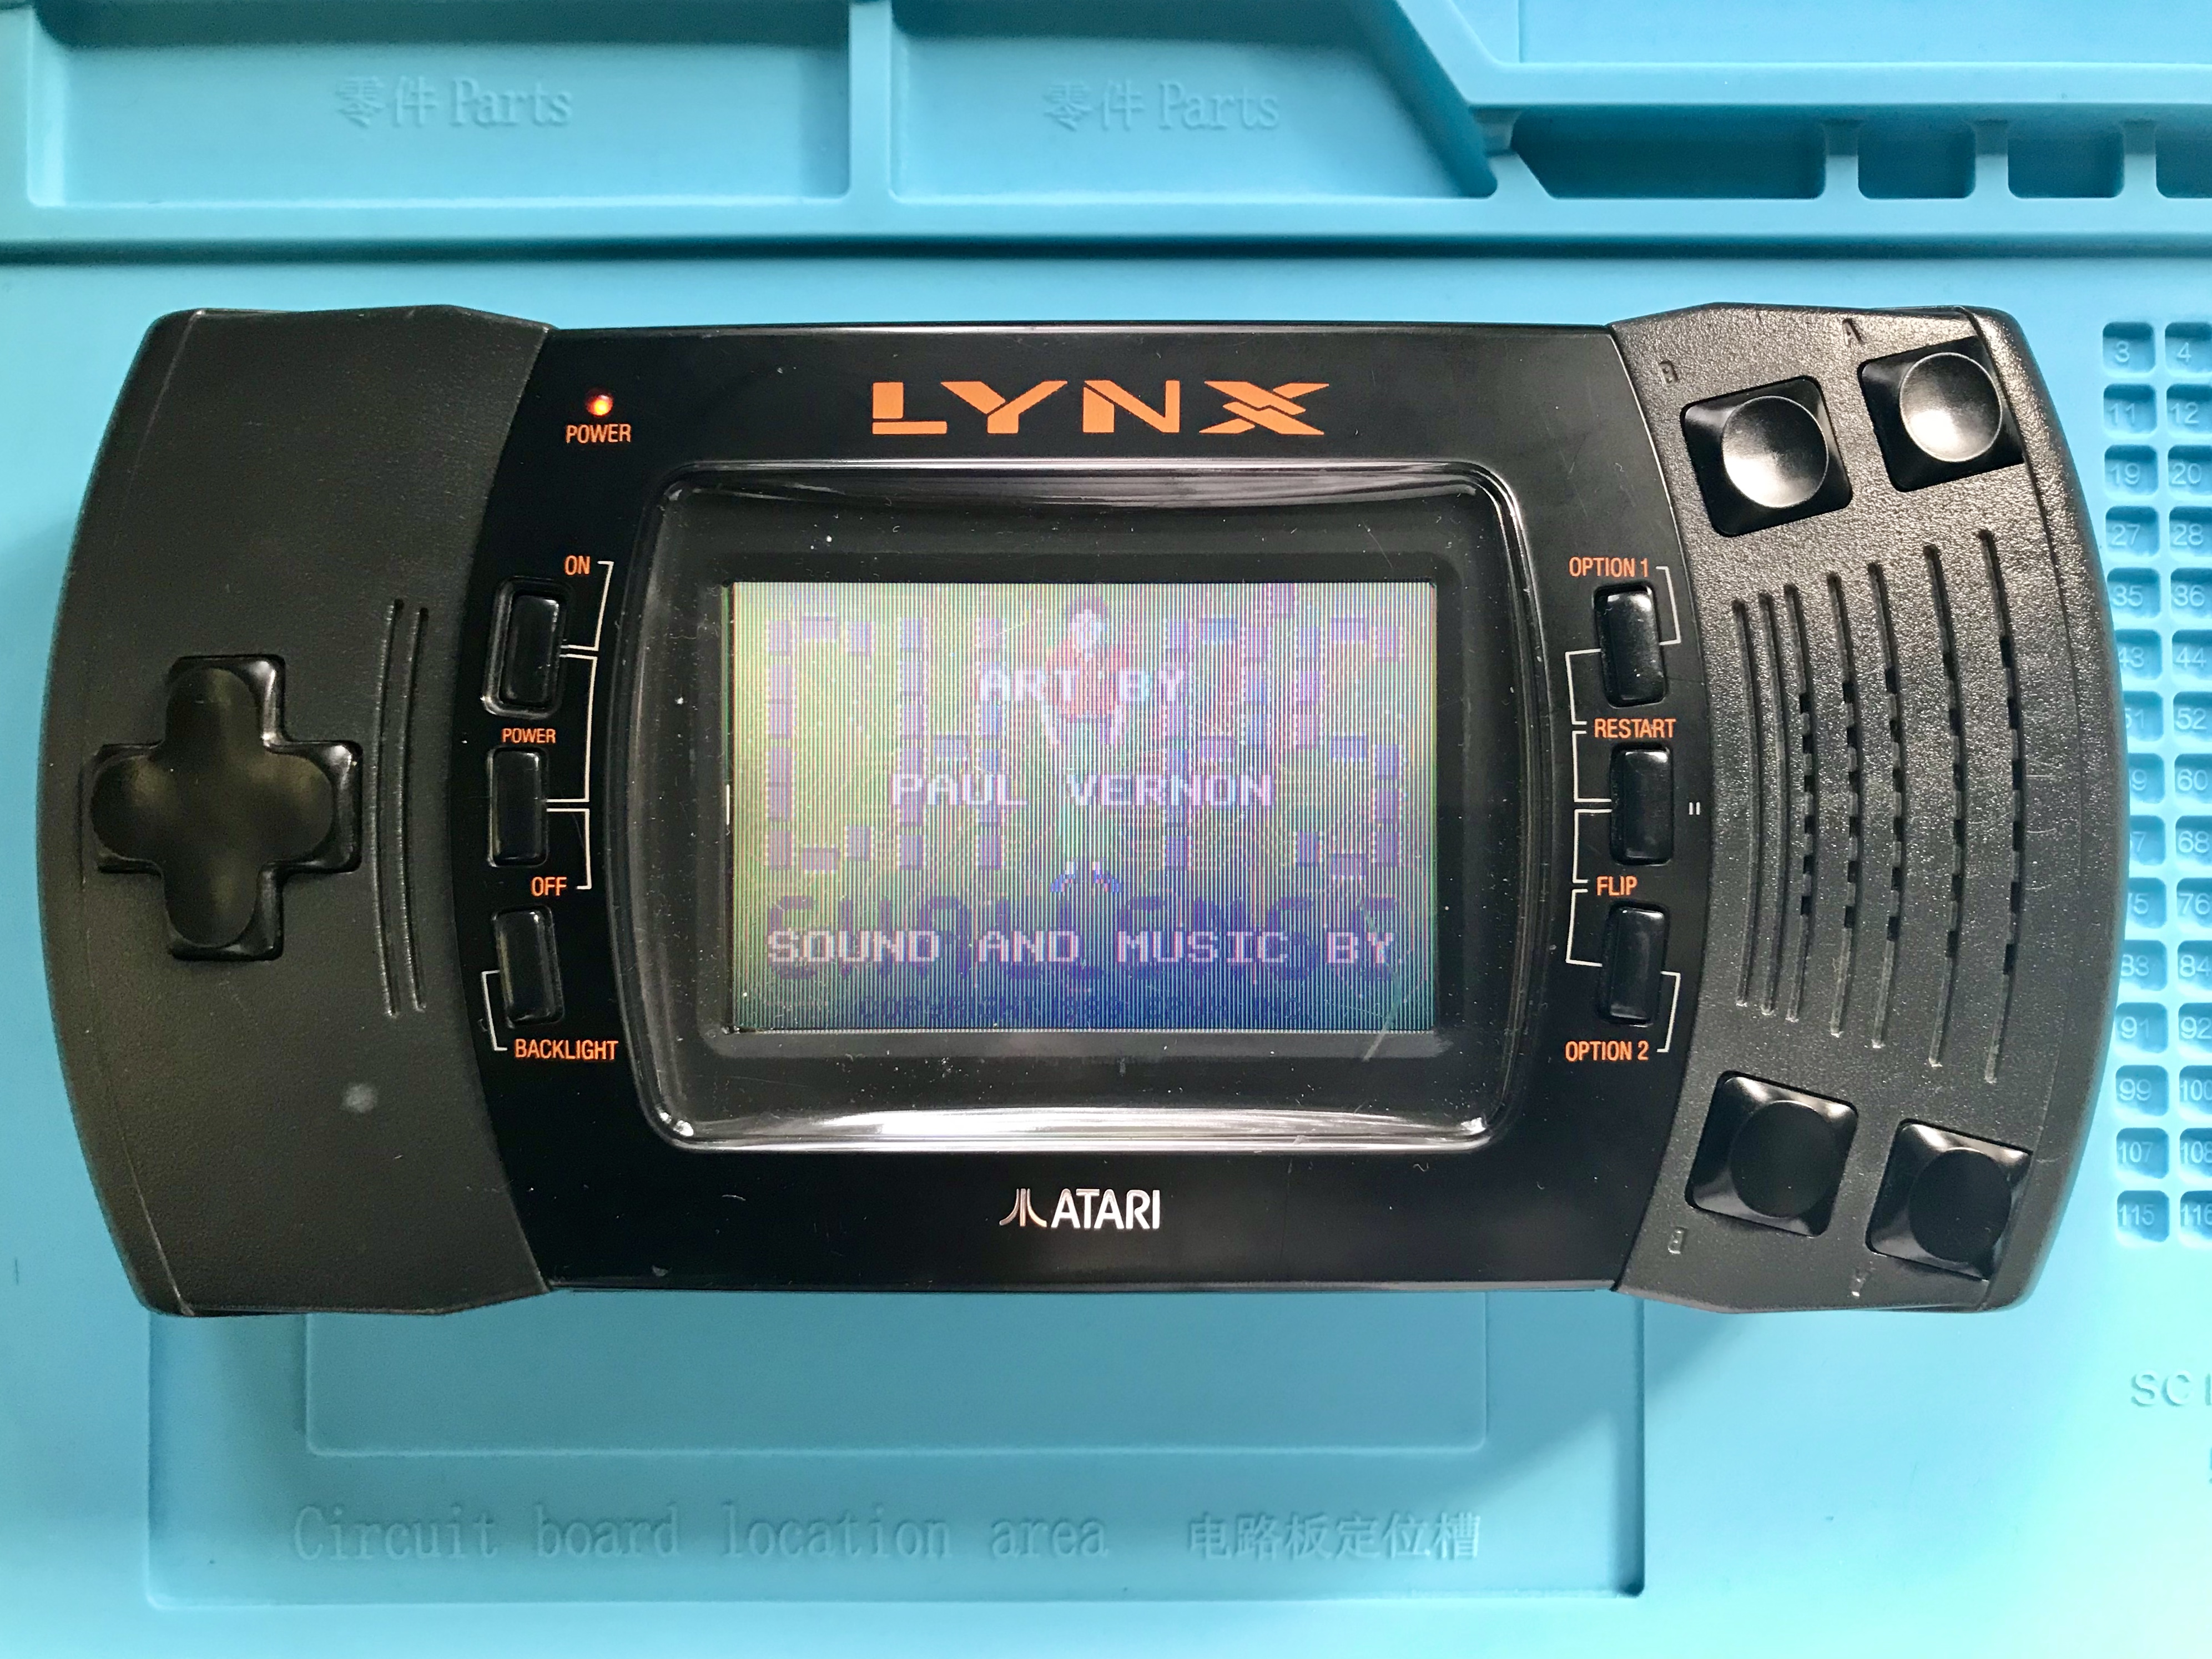 Atari Lynx II with original LCD